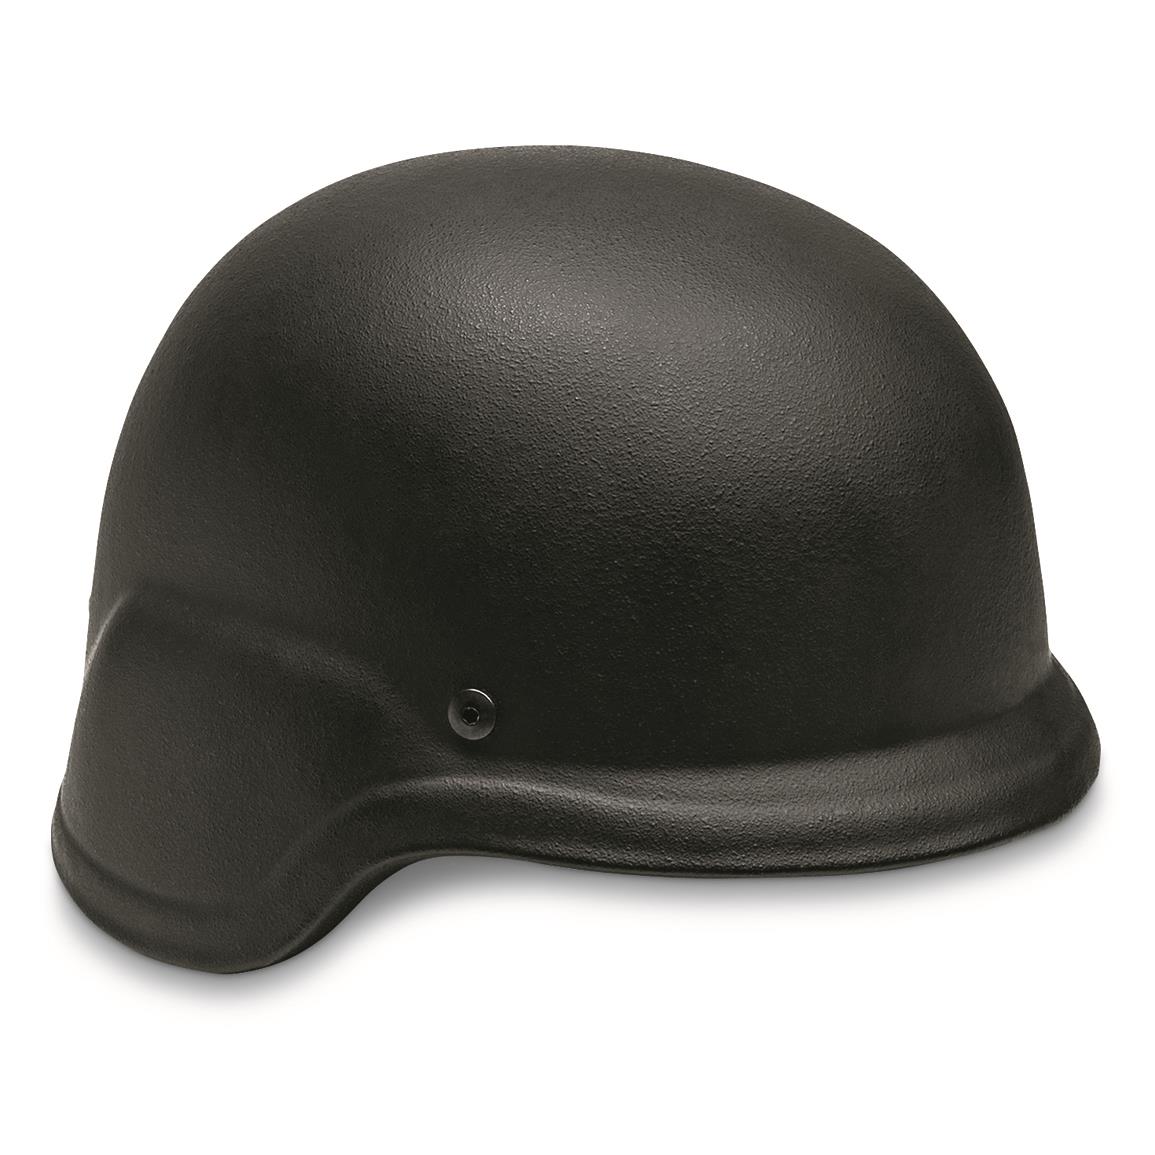 Details about   BALLISTIC 3A BULLET PROOF UHMW-PE HELMET High-grade Liner Version Helmet